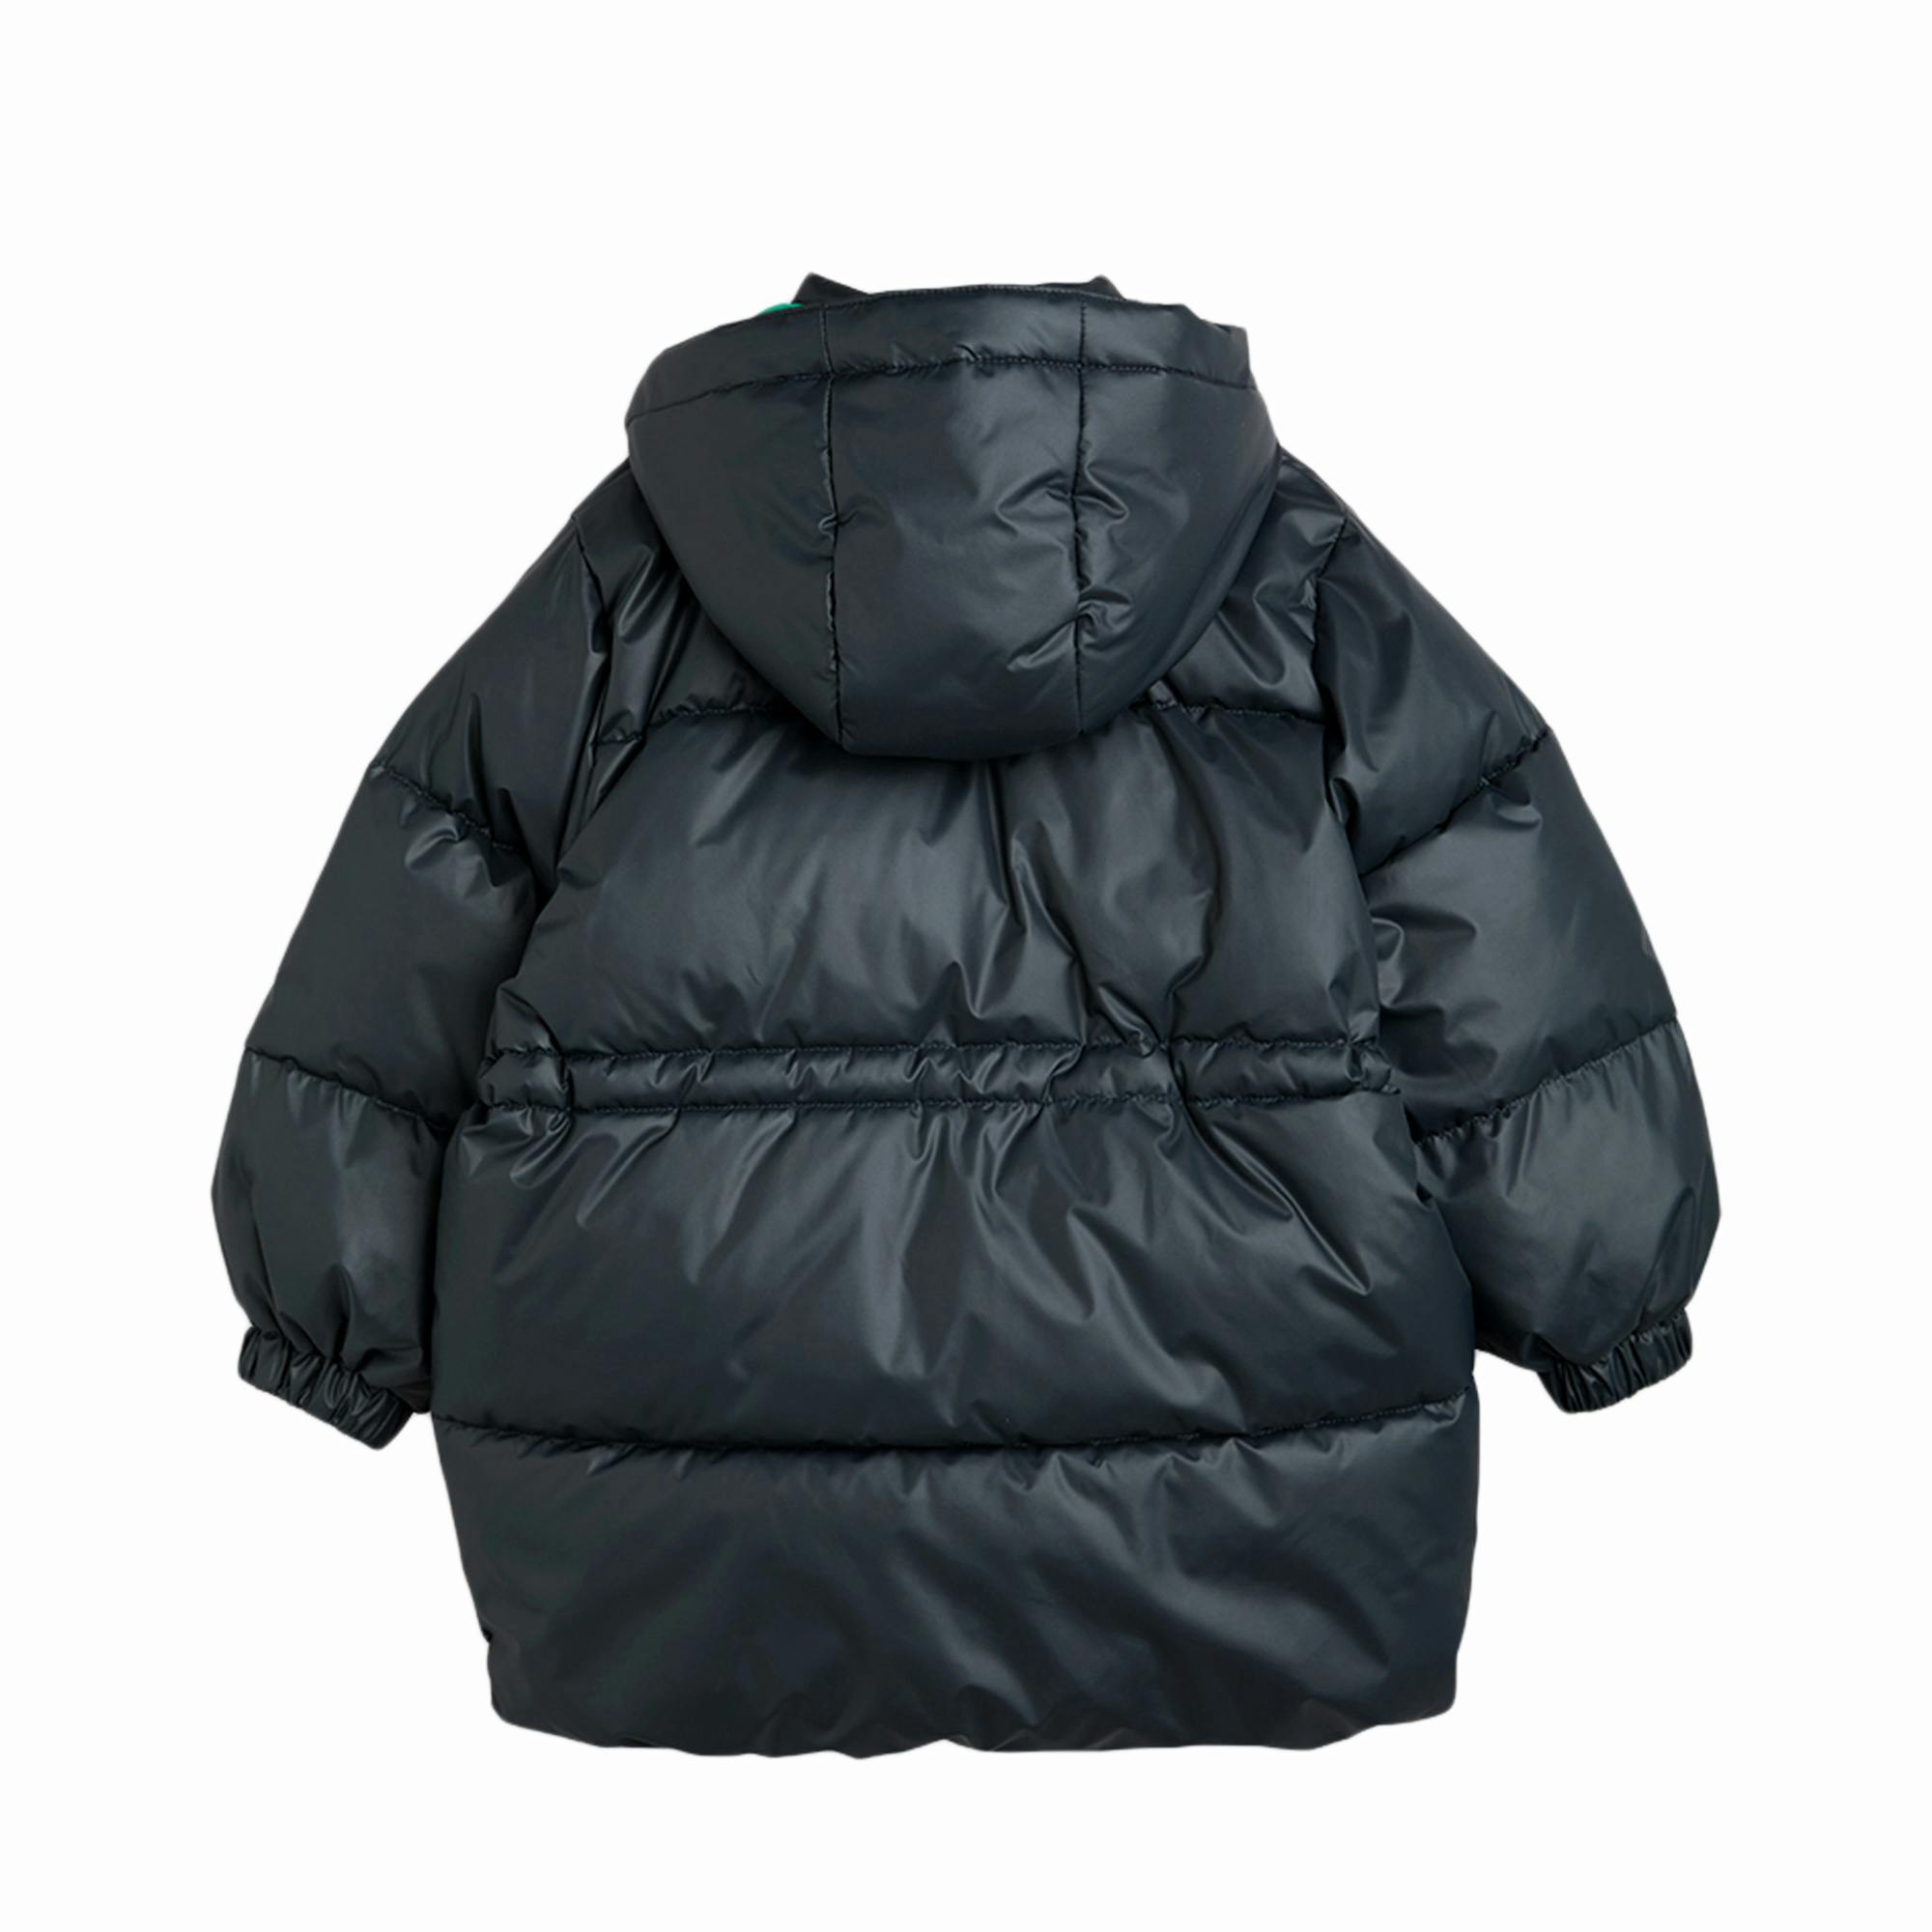 Jacka - Heavy puffer jacket black